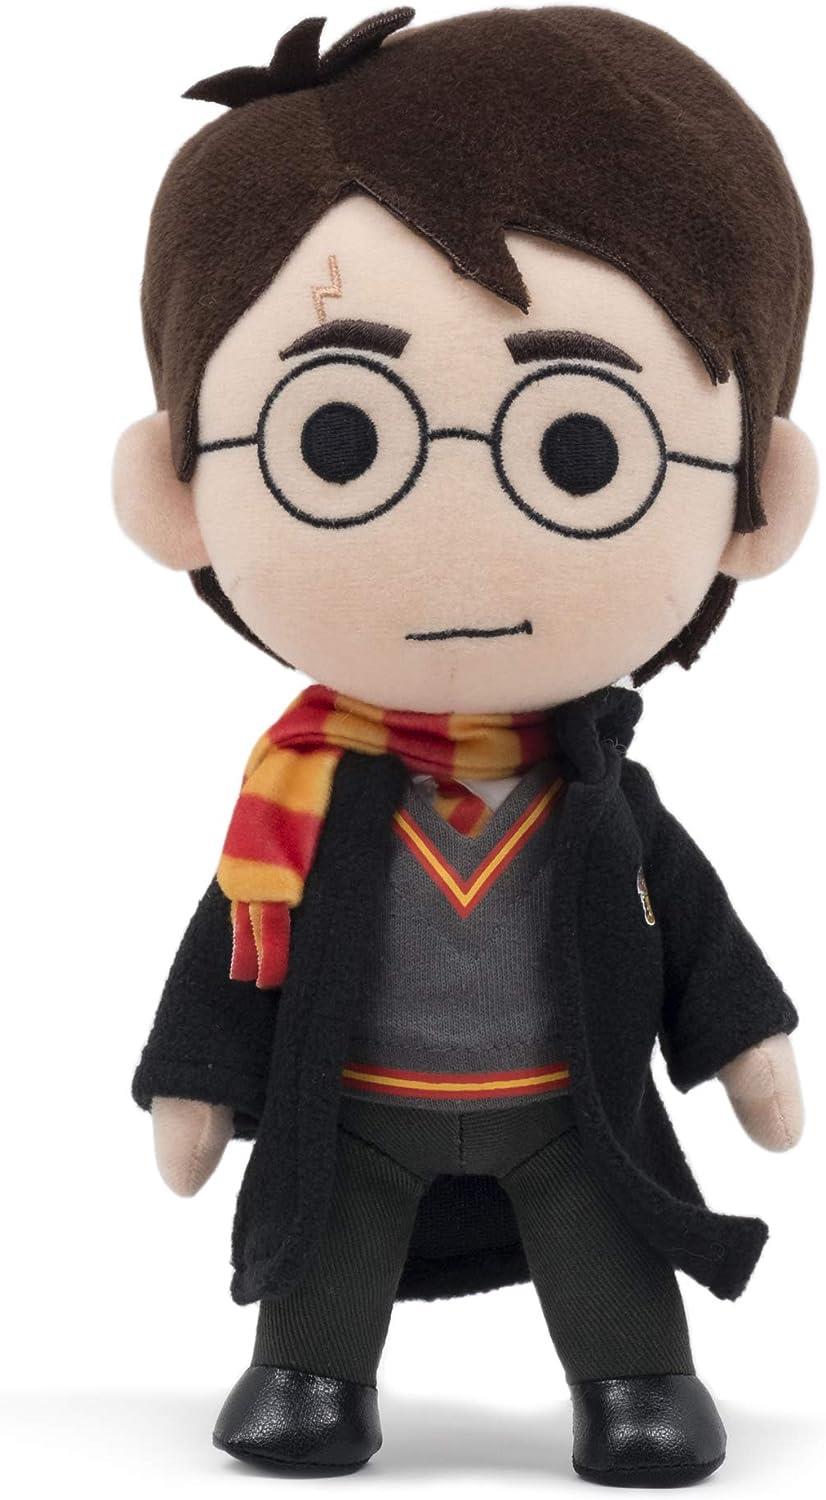 Harry Potter Q-Pal Plush Figure Toy 9" Gryffindor Scarf Sweater Collectible Quantum Mechanix